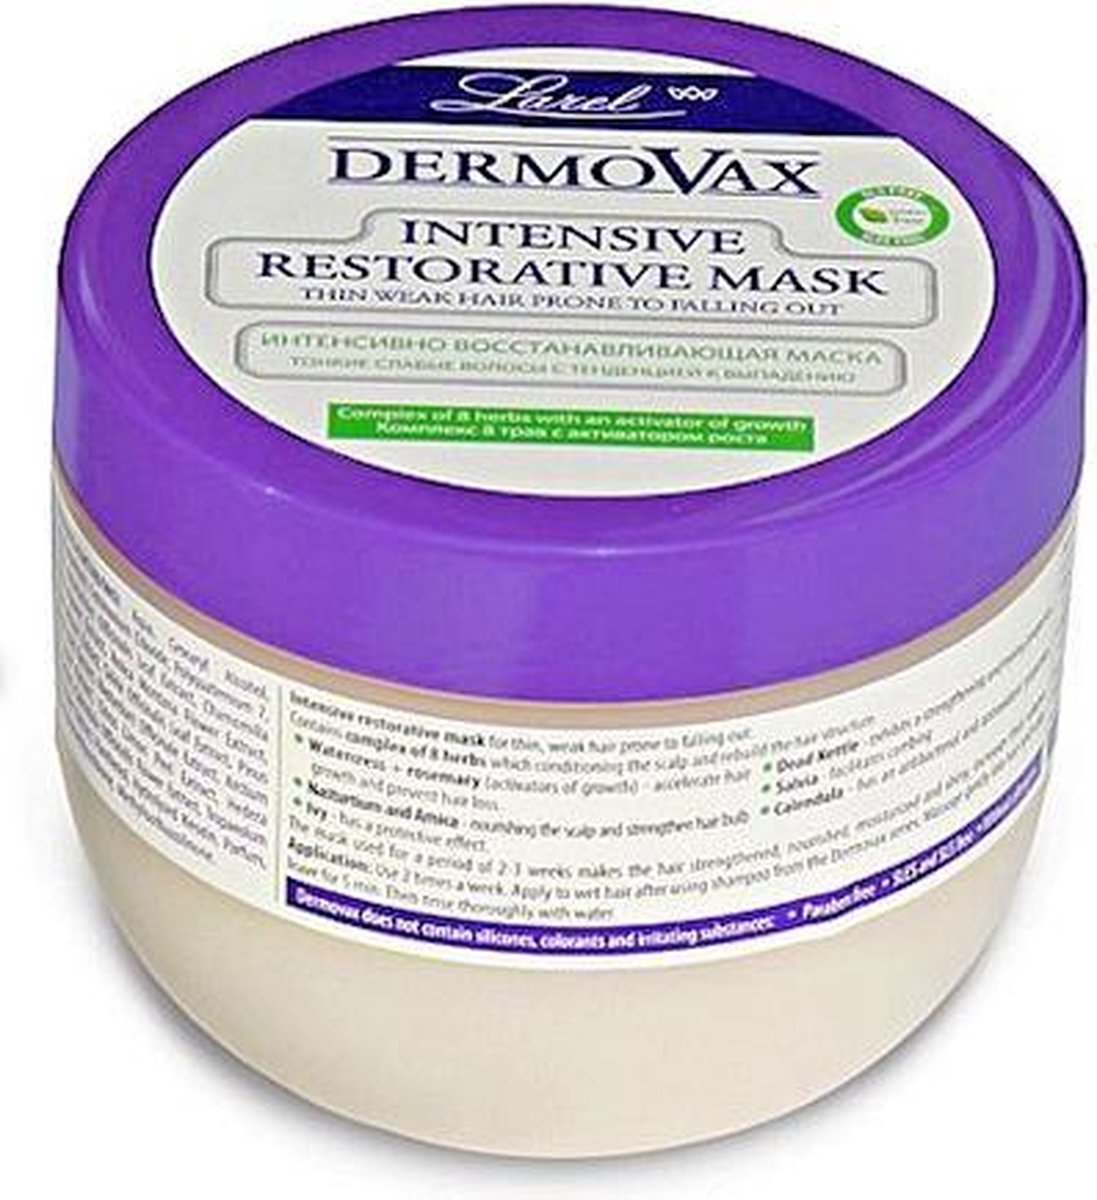 DermoVax Intensive Restorative Hair Mask 300ml.